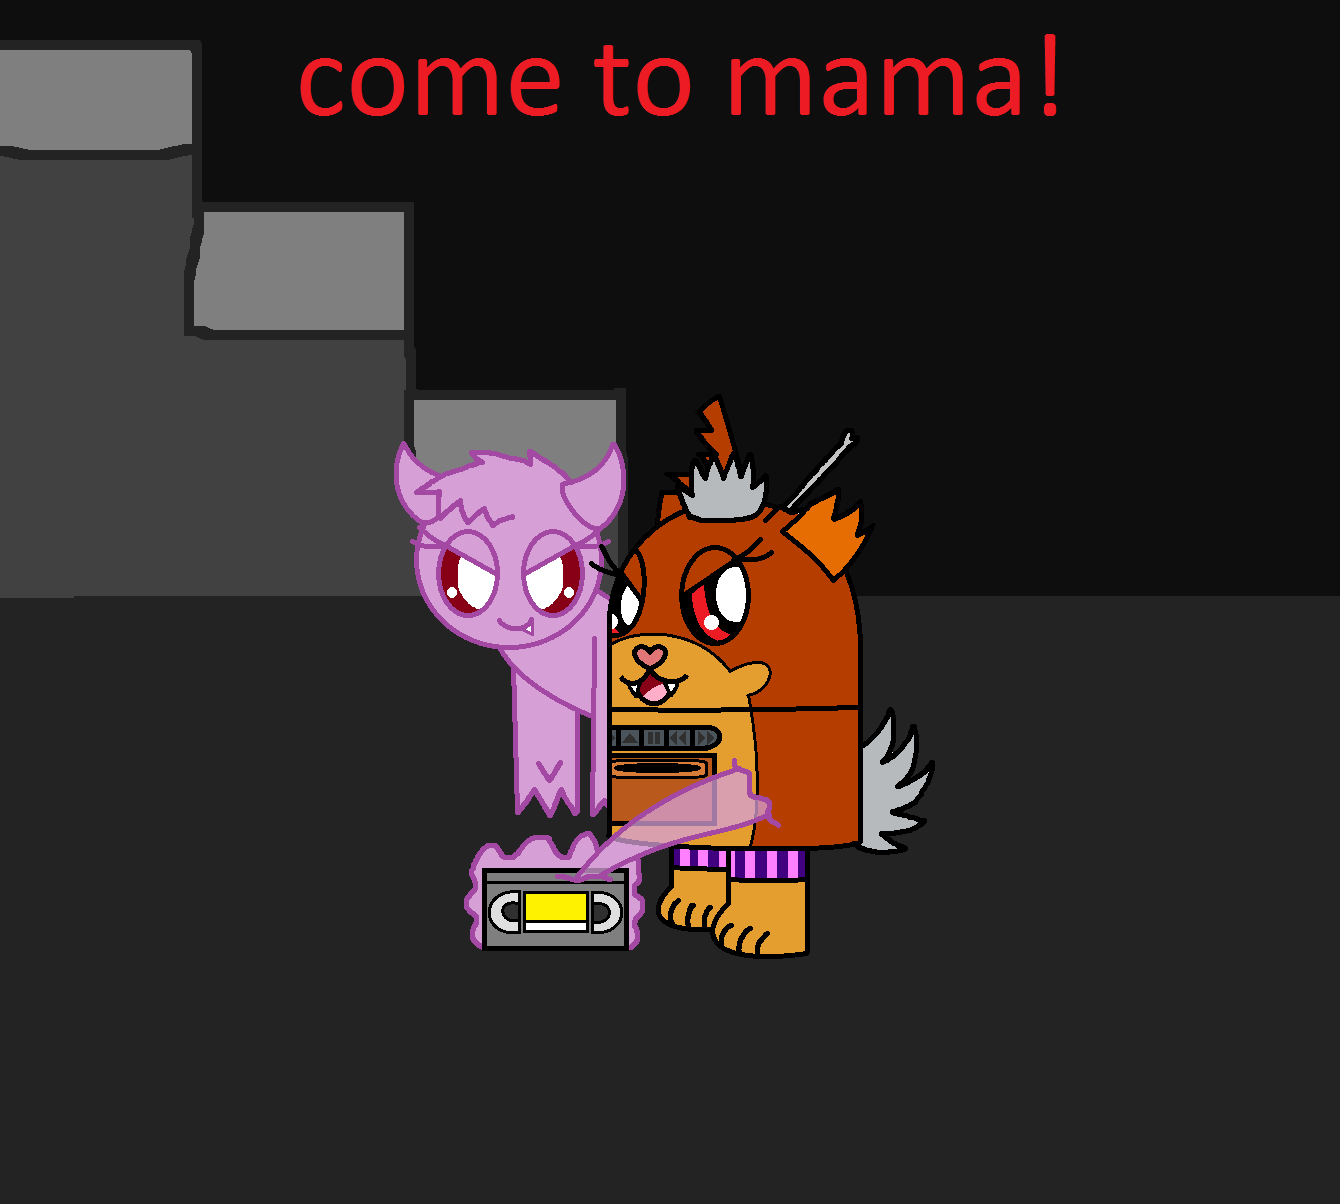 Come to mama.. - Smol Purtato here have some Mama (but no demon